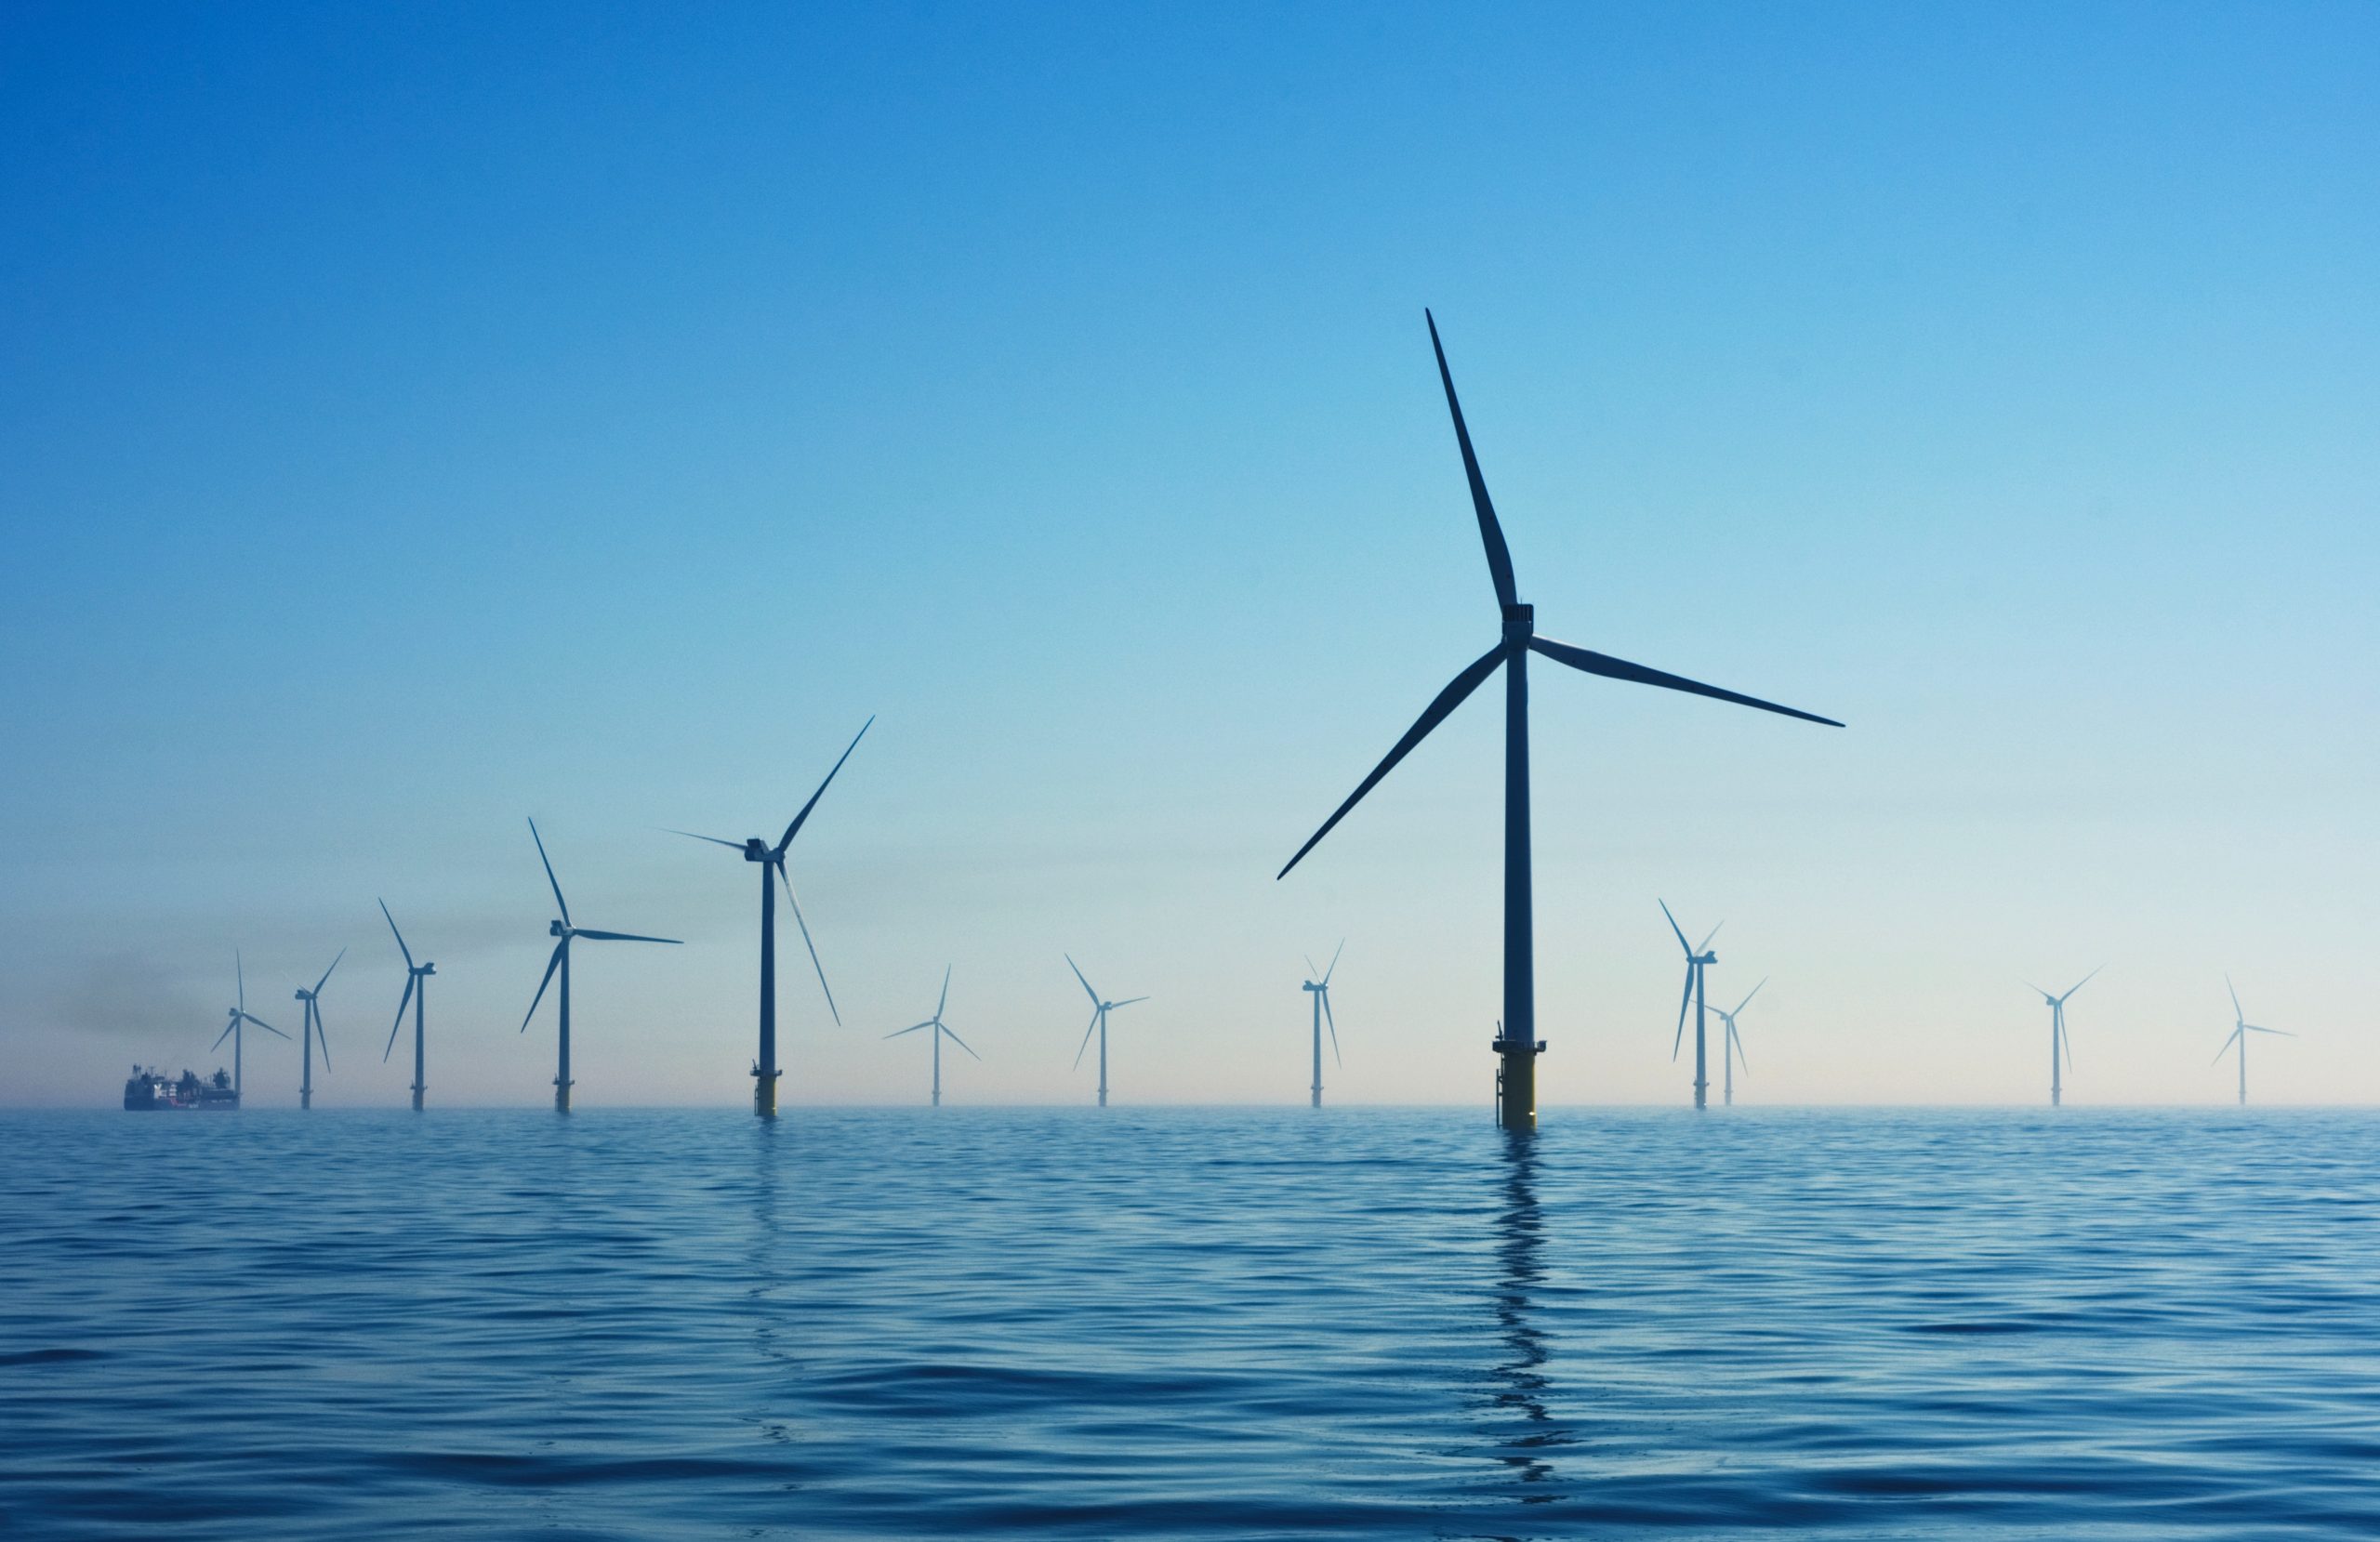 Brokers’ take: RHB initiates ‘buy’ on Marco Polo Marine on forecast renewable energy turnaround